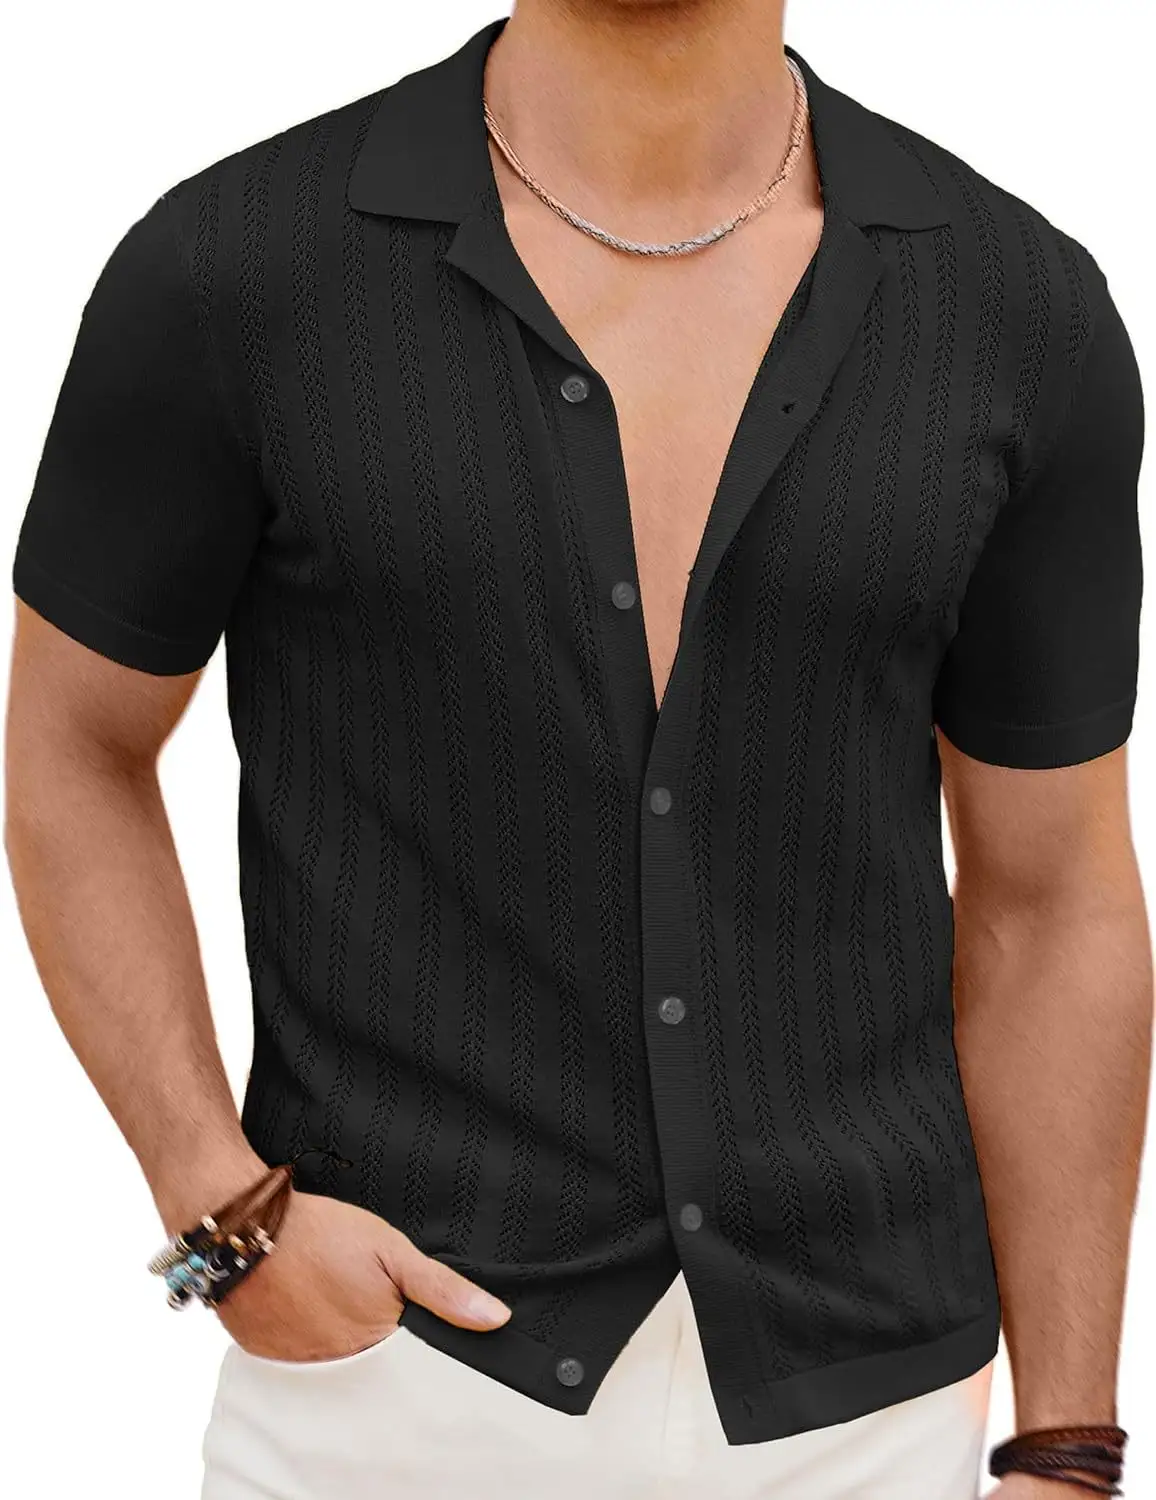 Odoodem erkek moda örme bluz oymak rahat tek göğüslü kısa kollu bluz